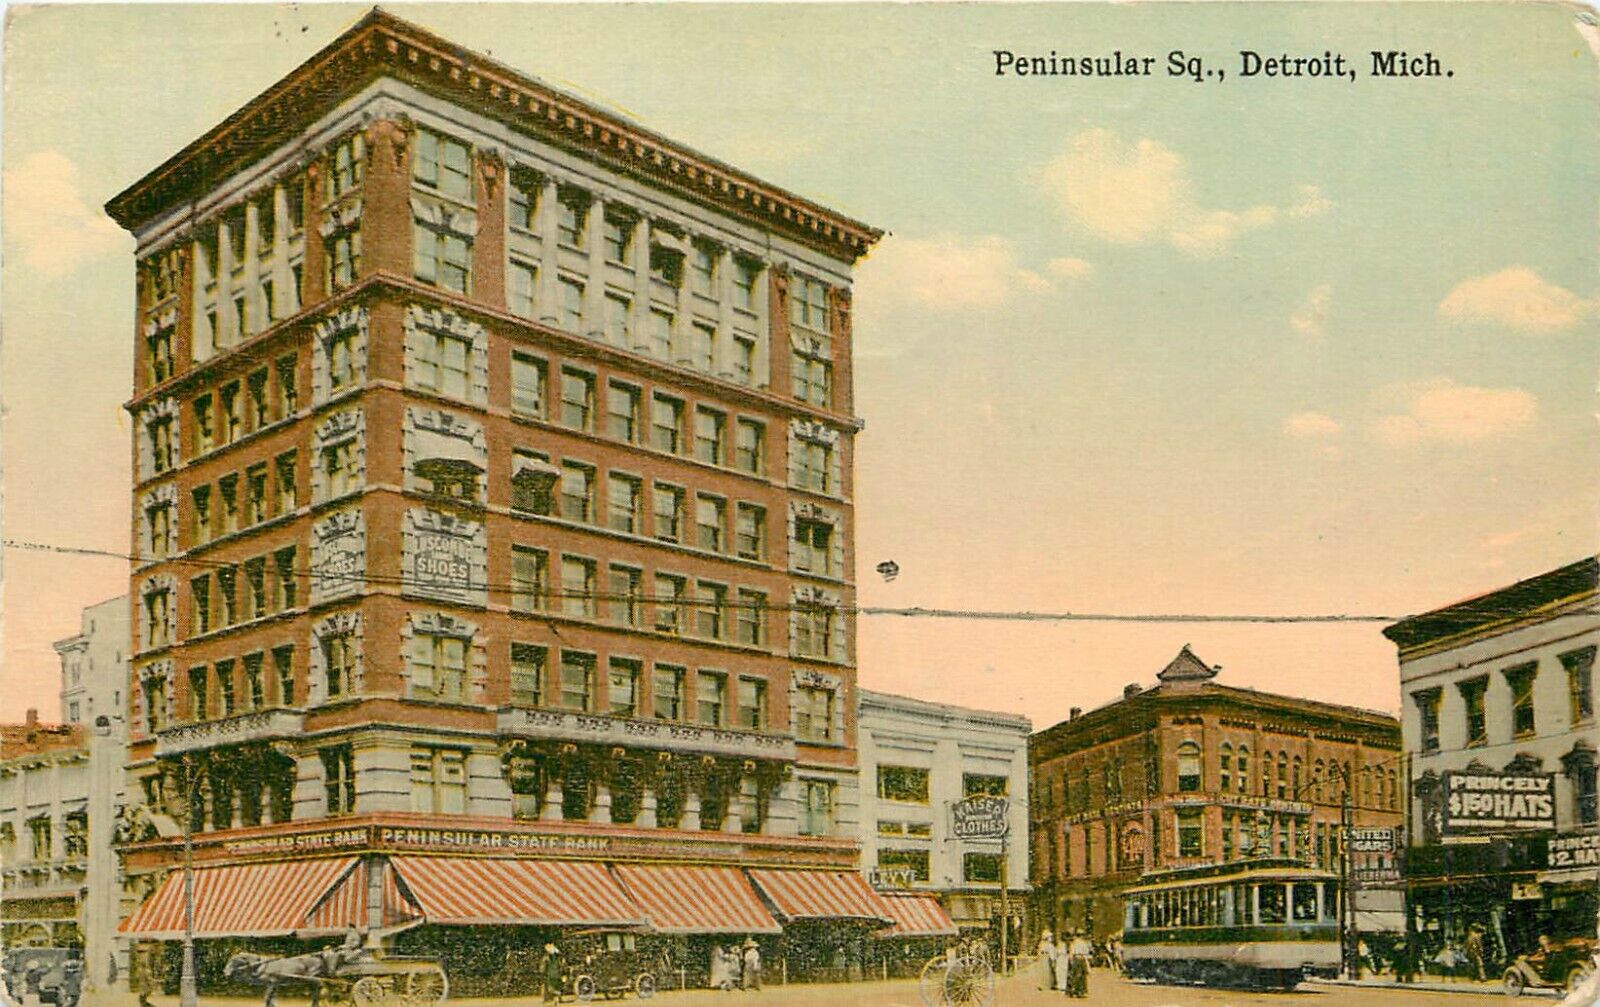 c1910 Peninsular Square - Bank, Kaiser Clothe Store, Detroit, Michigan Postcard